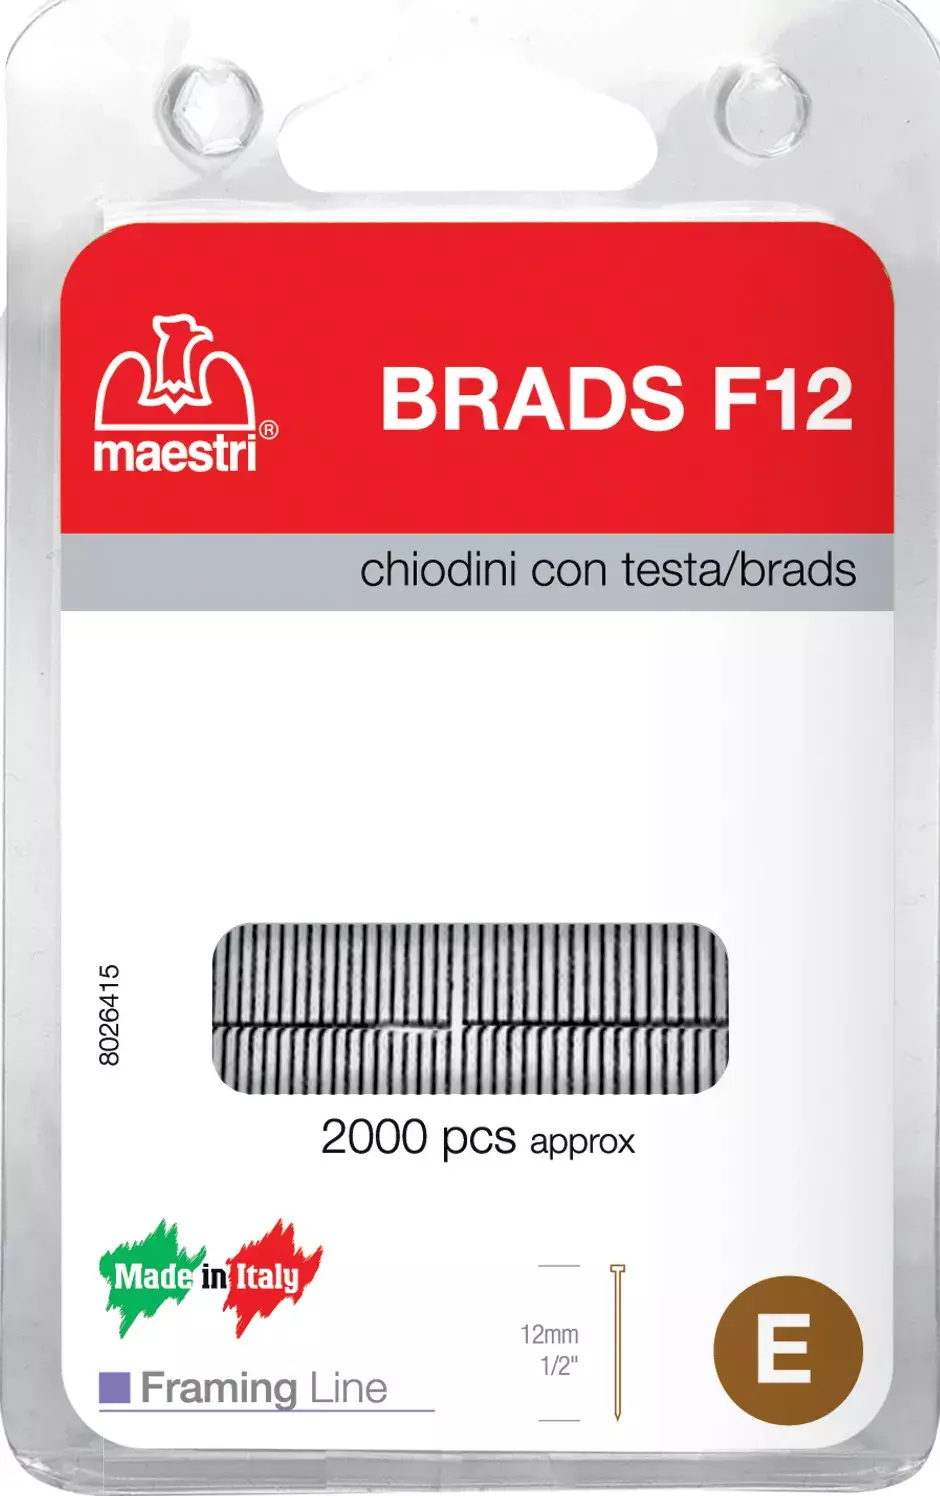 gbc Chiodini C-testa blister RO-MA FAST F 12 Zincato/Zinc plated ROM1130840